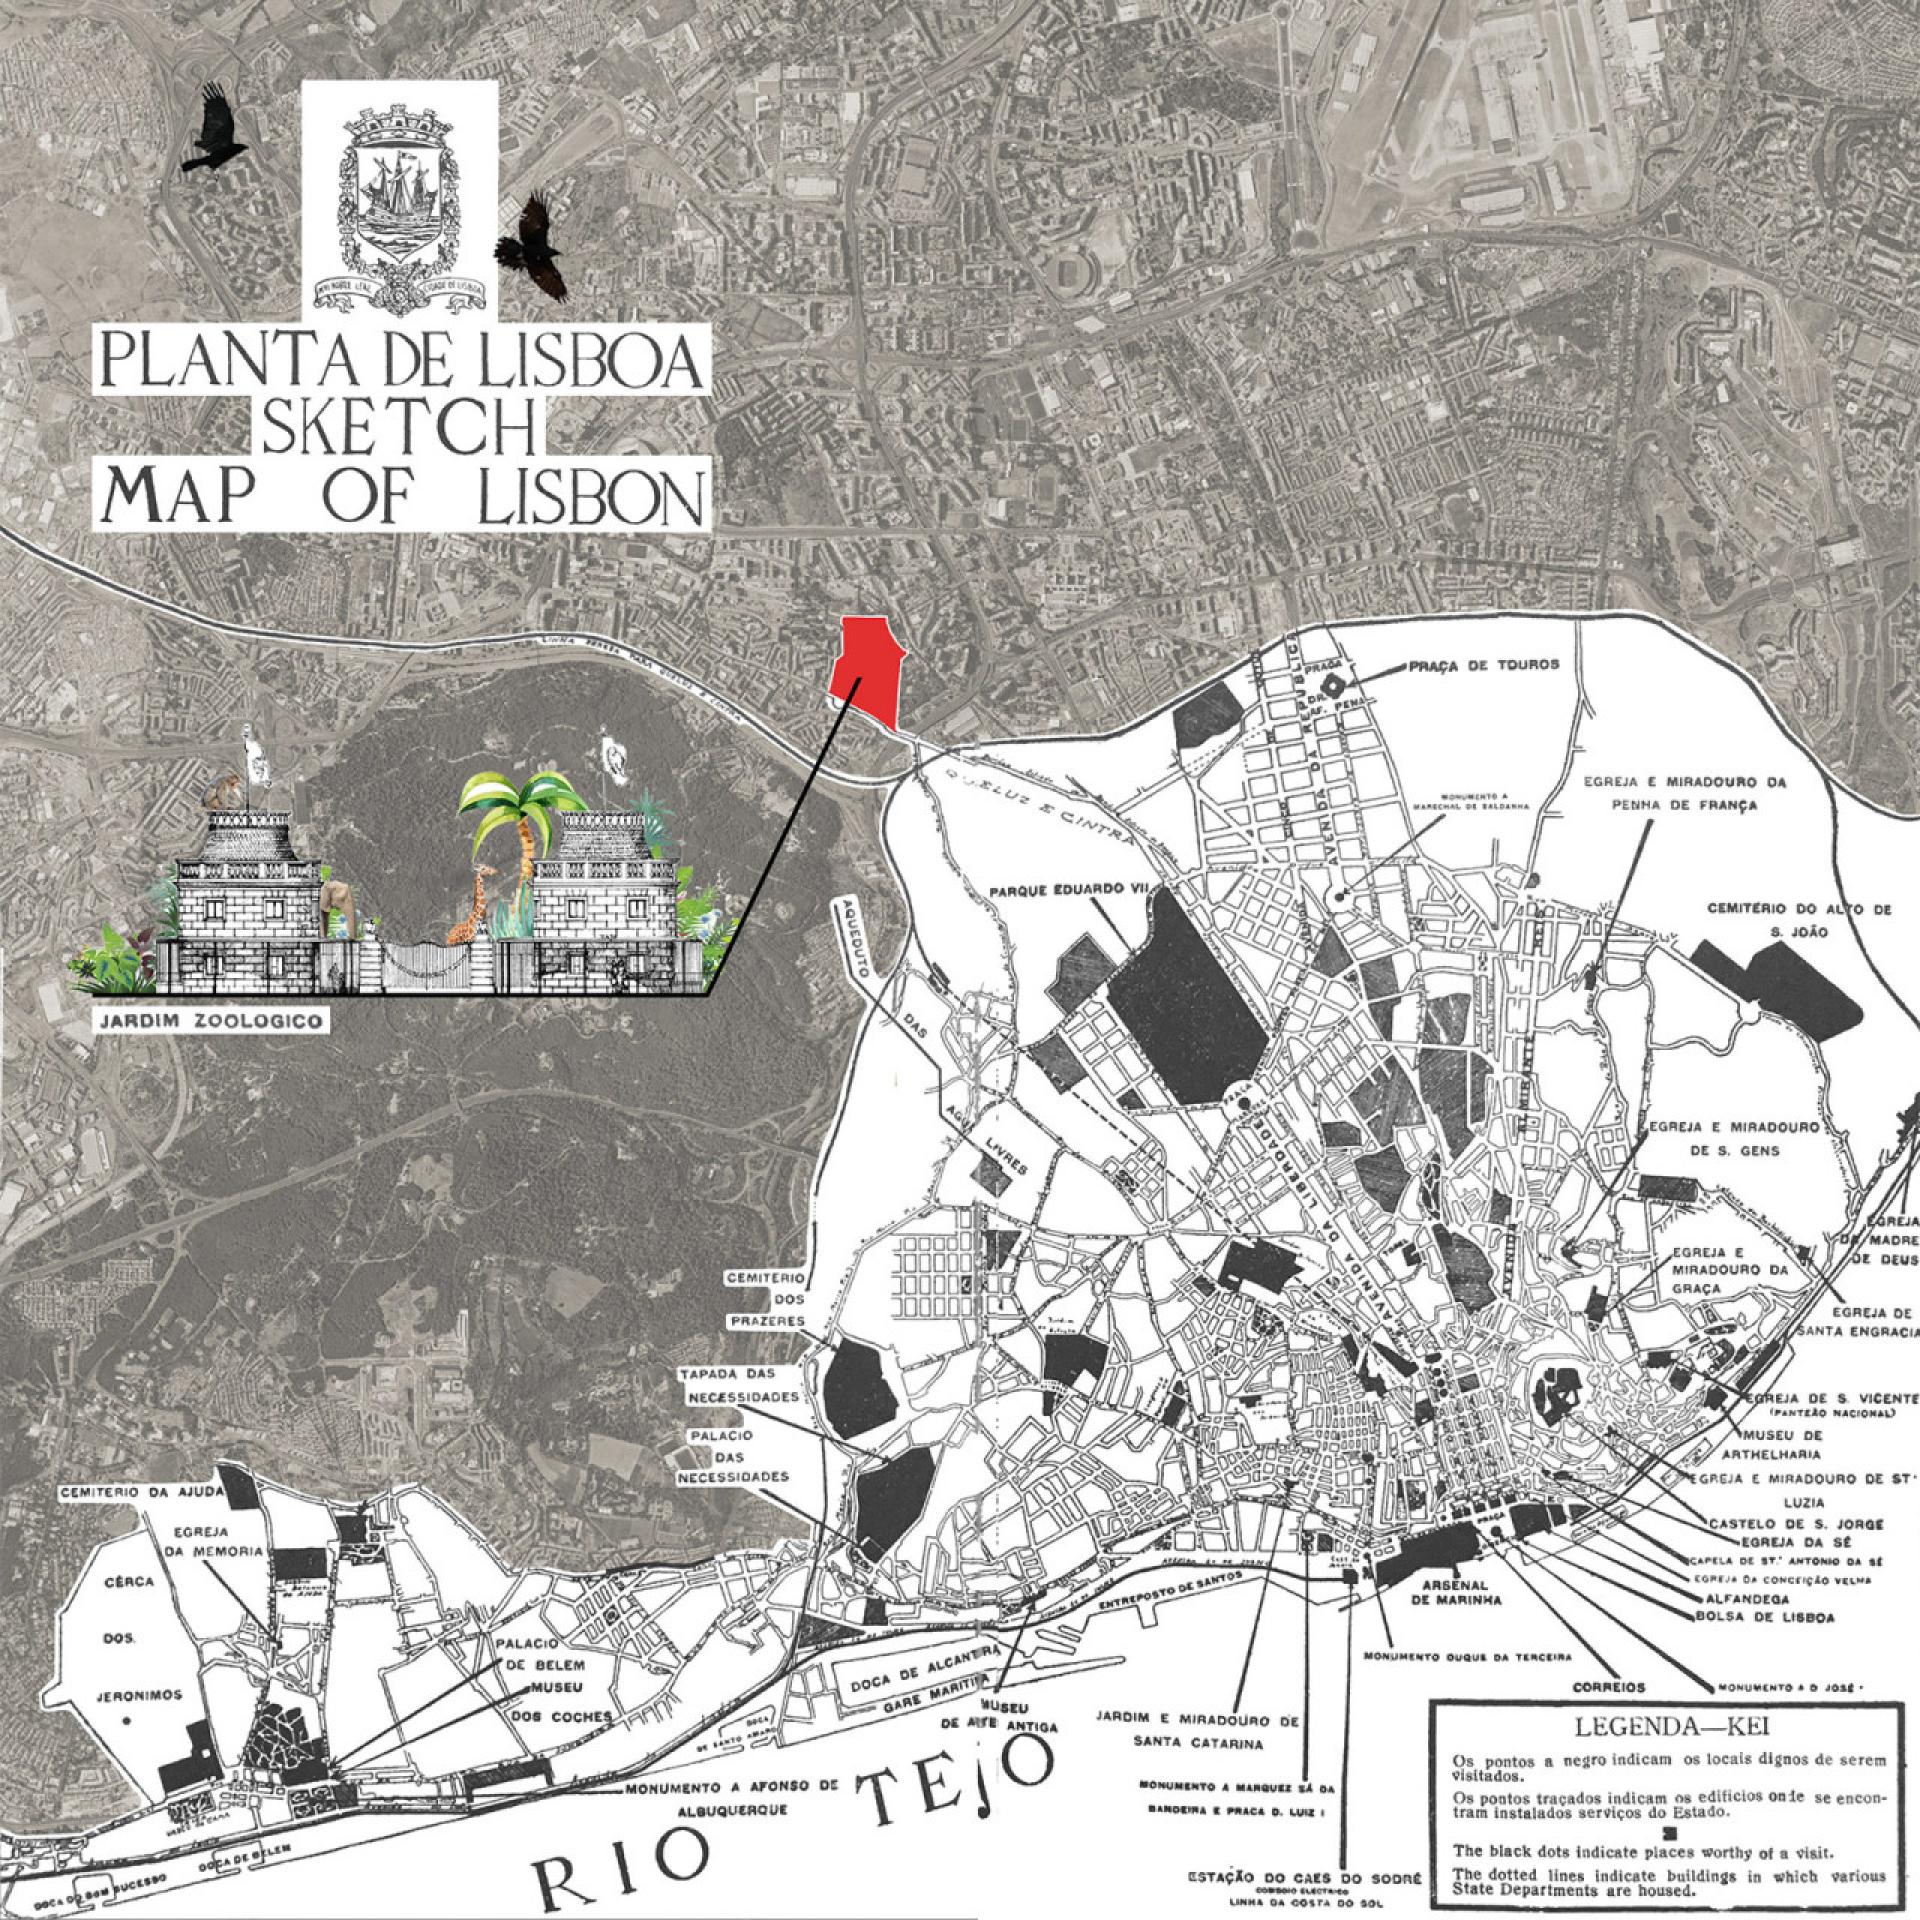 Map of the original edition “Guia do Turista em Lisboa” (1929) [property of Manuel dos Santos and Ascenção Araujo, Lisbon] modified by the curators with the satellite image of Lisbon (2020).